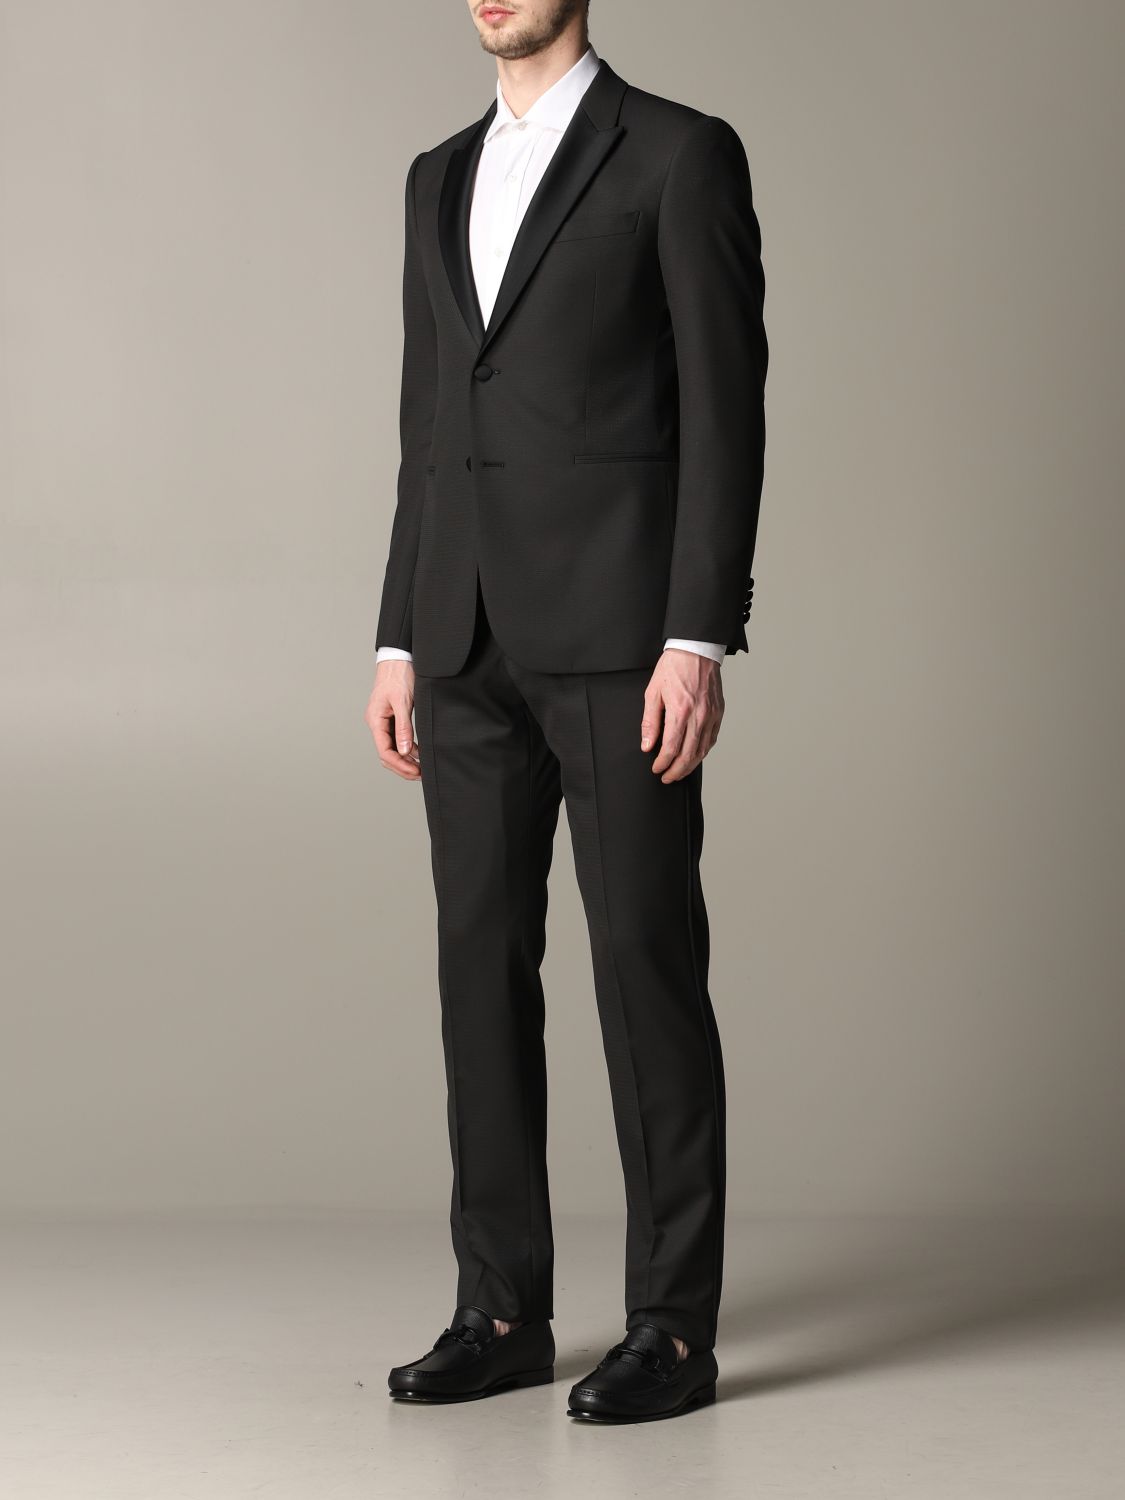 Emporio Armani Outlet: tuxedo suit in wool 270gr drop 7 - Black | Emporio Armani  suit 51VMOP 51565 online on 